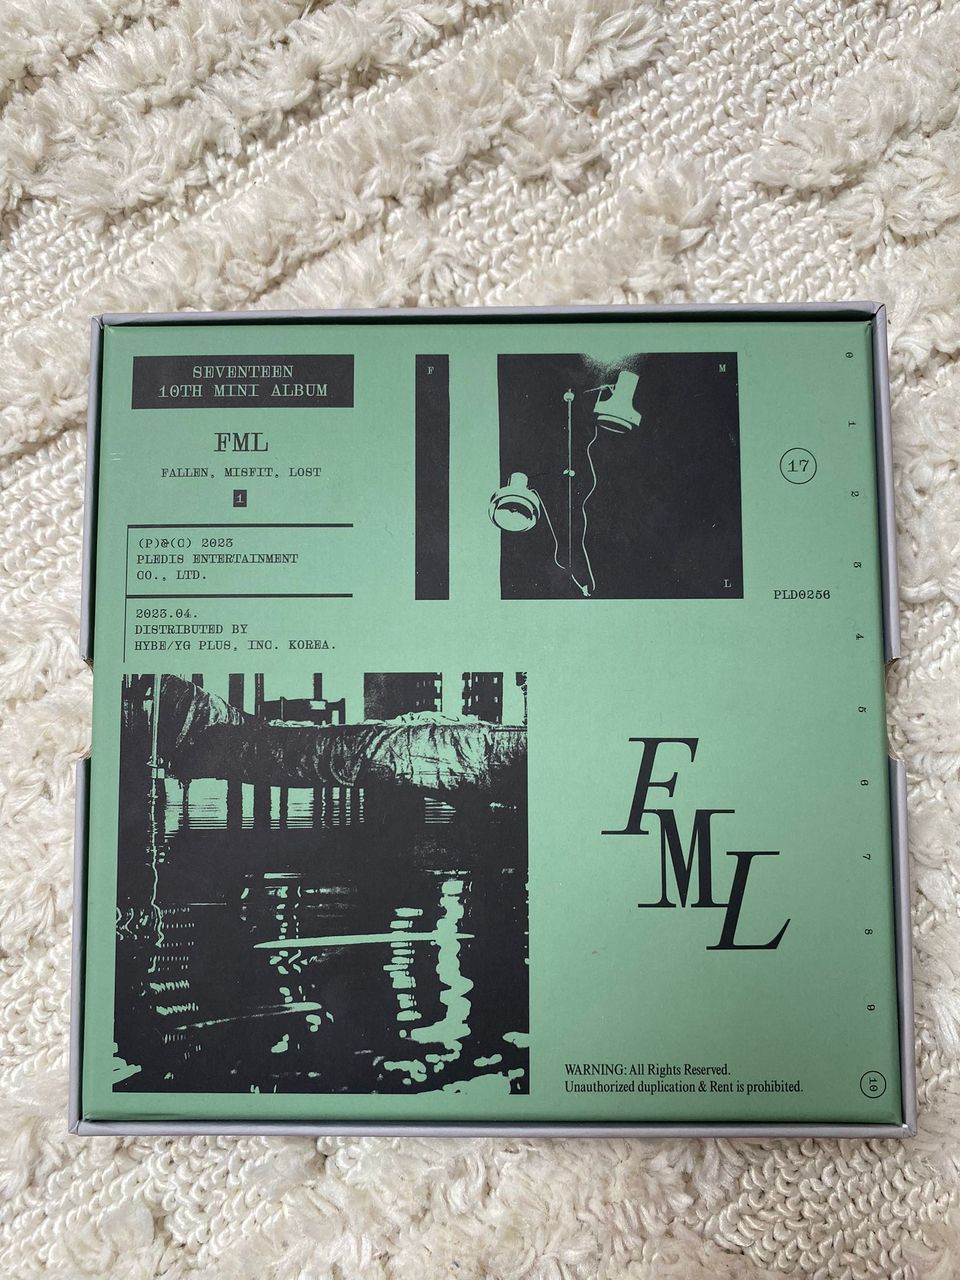 Fml-seventeen albumi